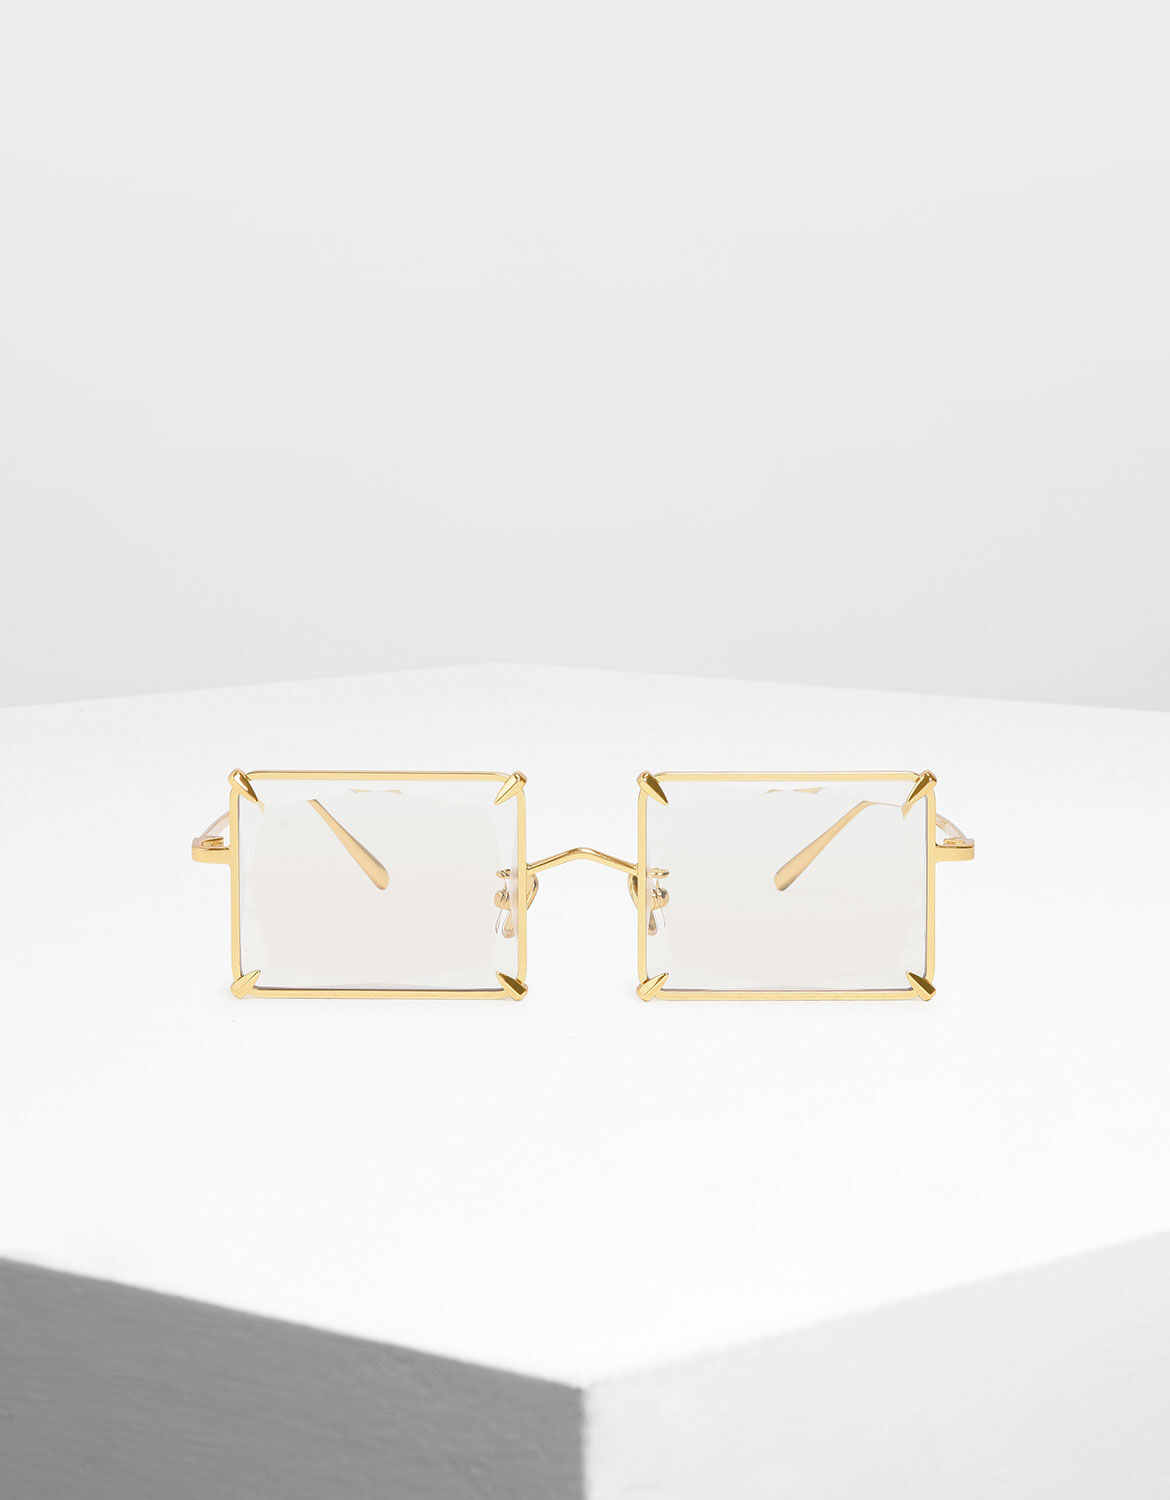 square wire frame glasses